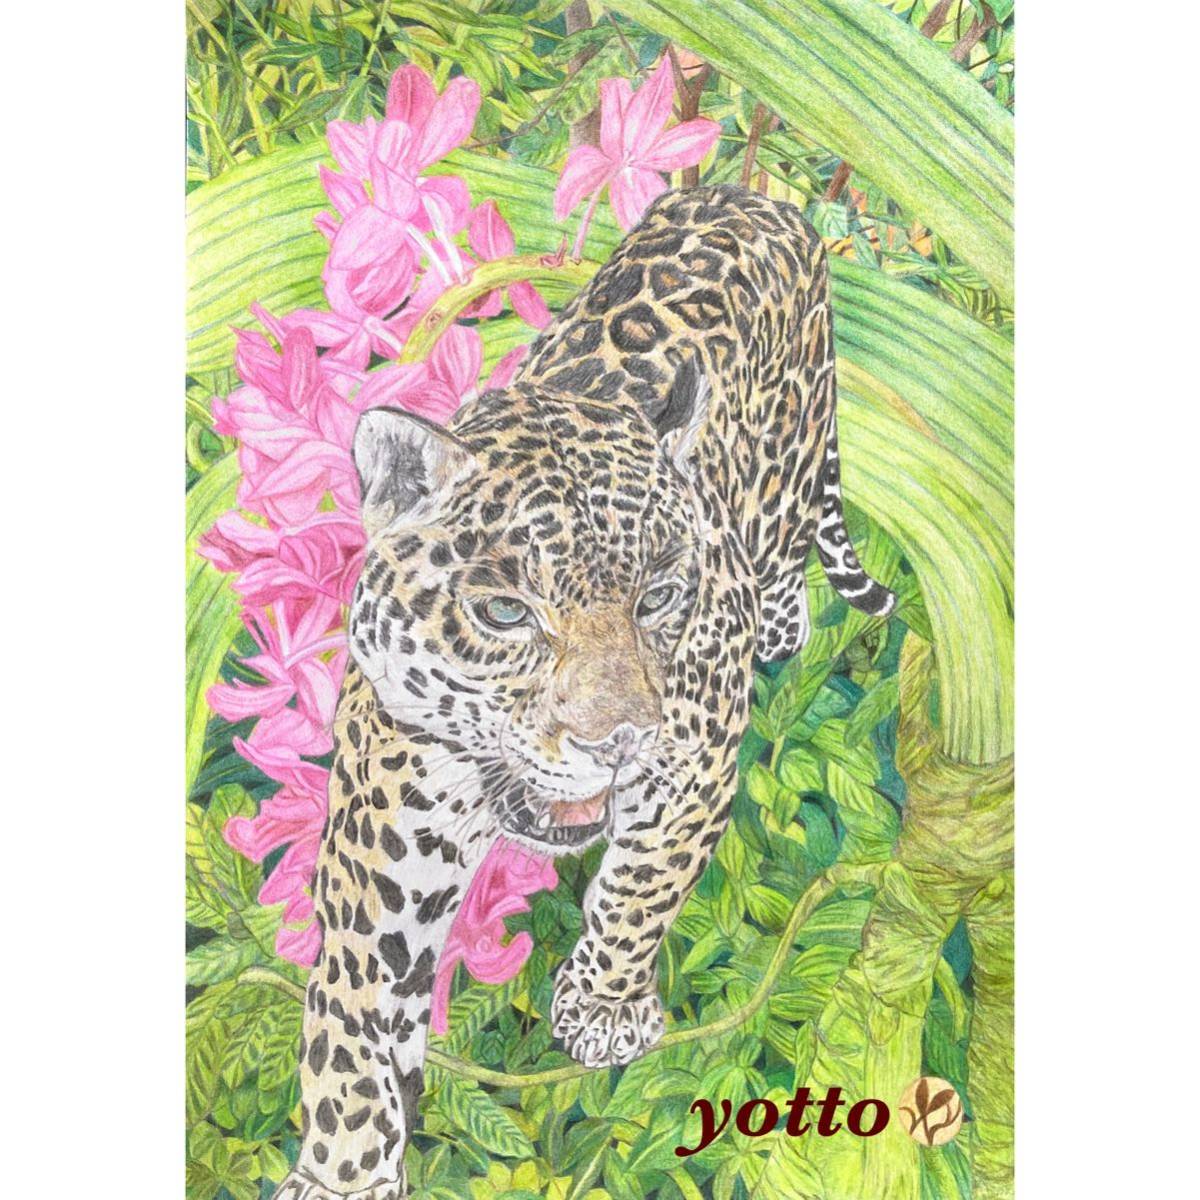 Colored pencil drawing Jaguar A4 with frame◇◆Hand-drawn◇Original drawing◆Animal◇◆Yotto◇, artwork, painting, pencil drawing, charcoal drawing